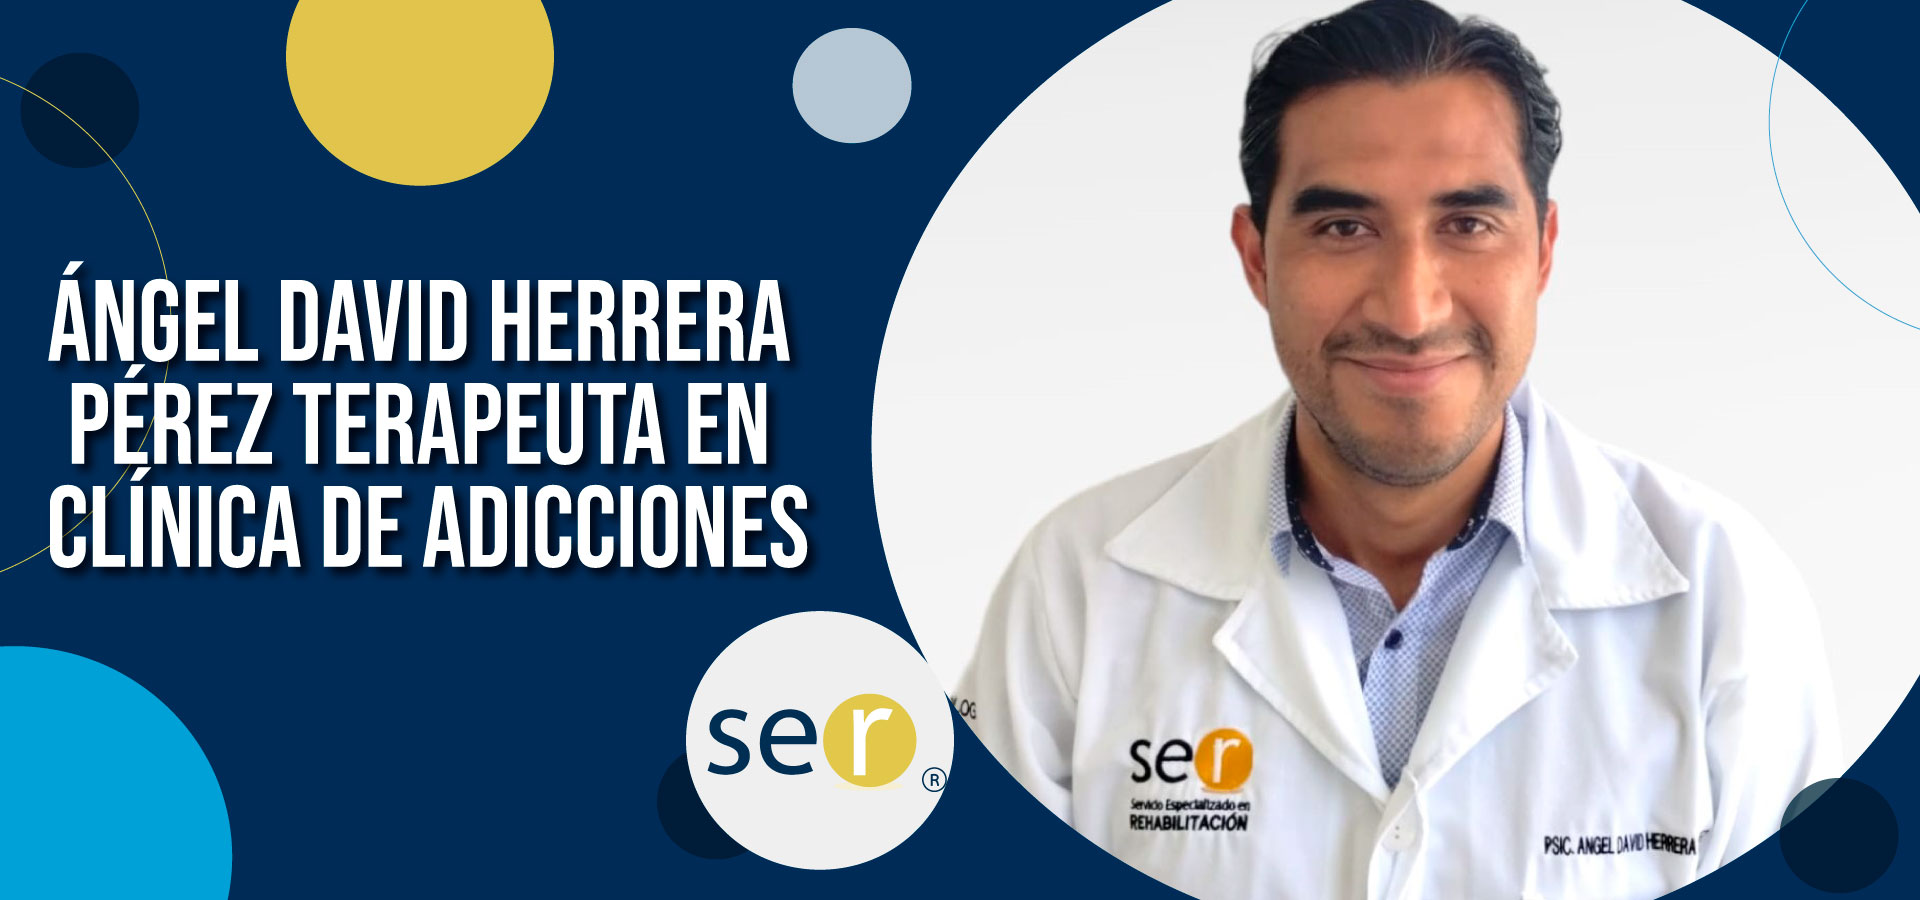 Clinica ser banner Angel David Herrera Perez Terapeuta en clinica de adicciones - Clínica-SER